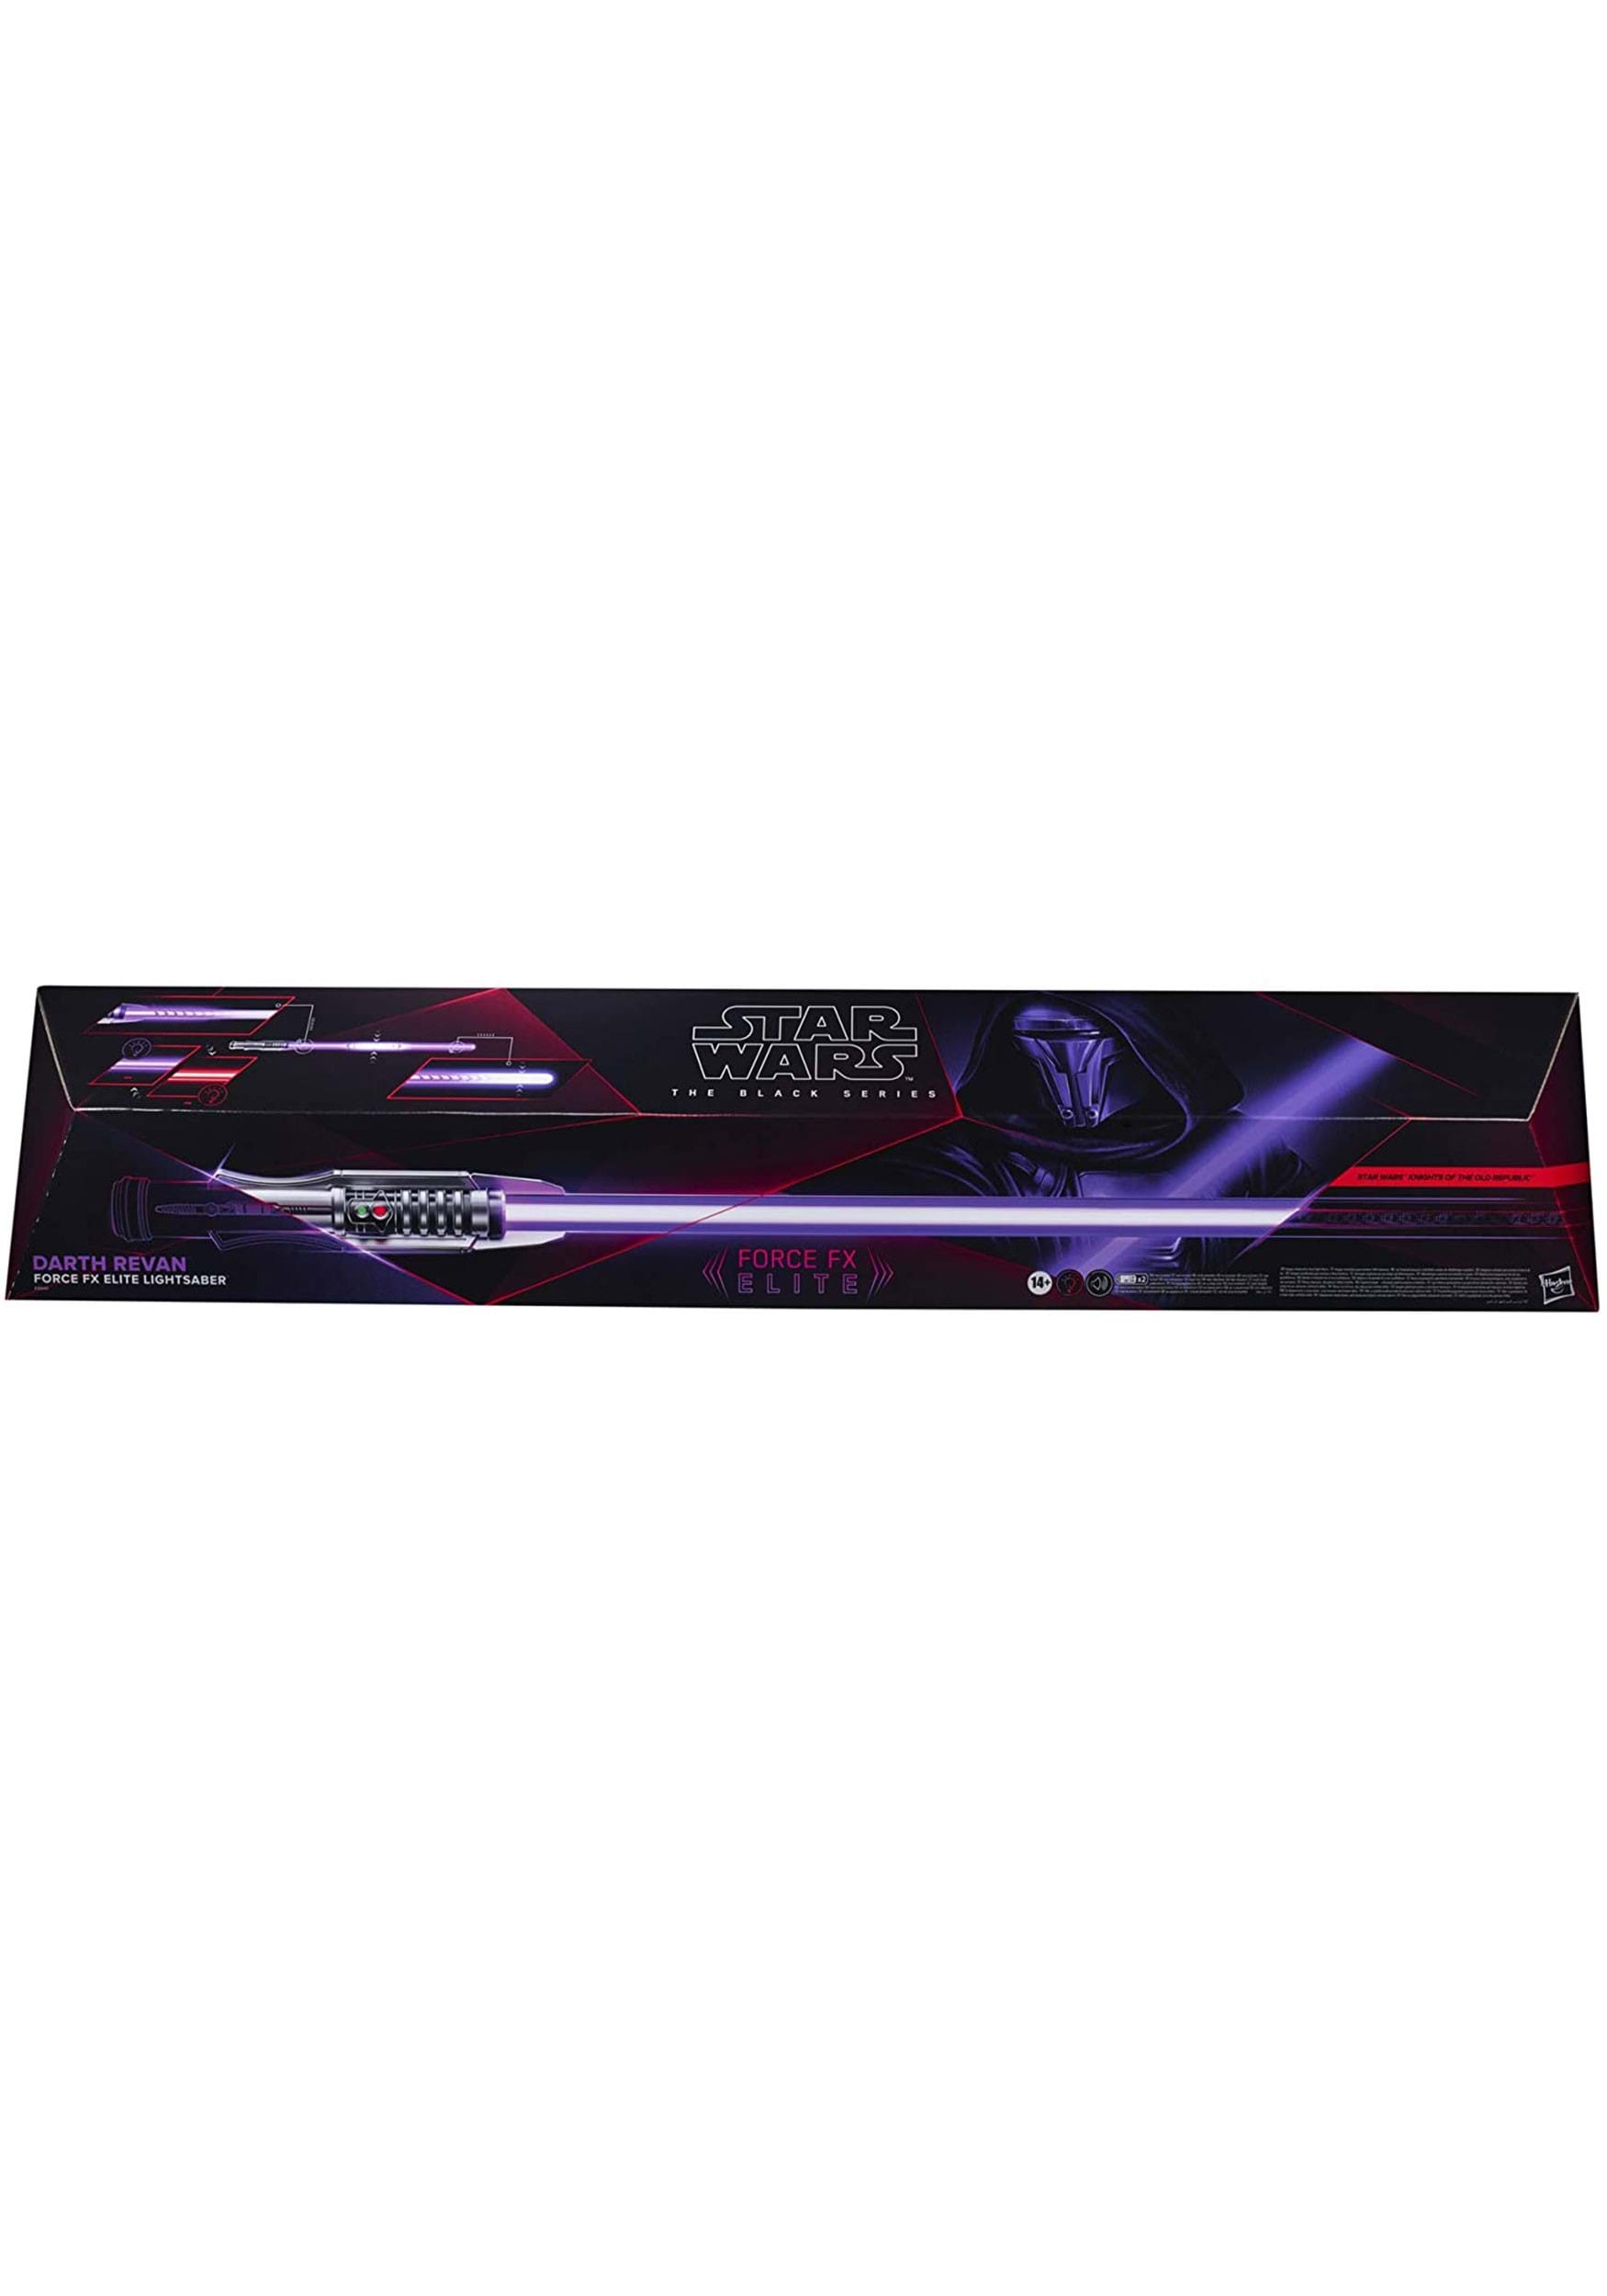 Image of StarWars The Black Series Elite Darth Revan Force FX Lightsaber ID EEDHSE8940-ST